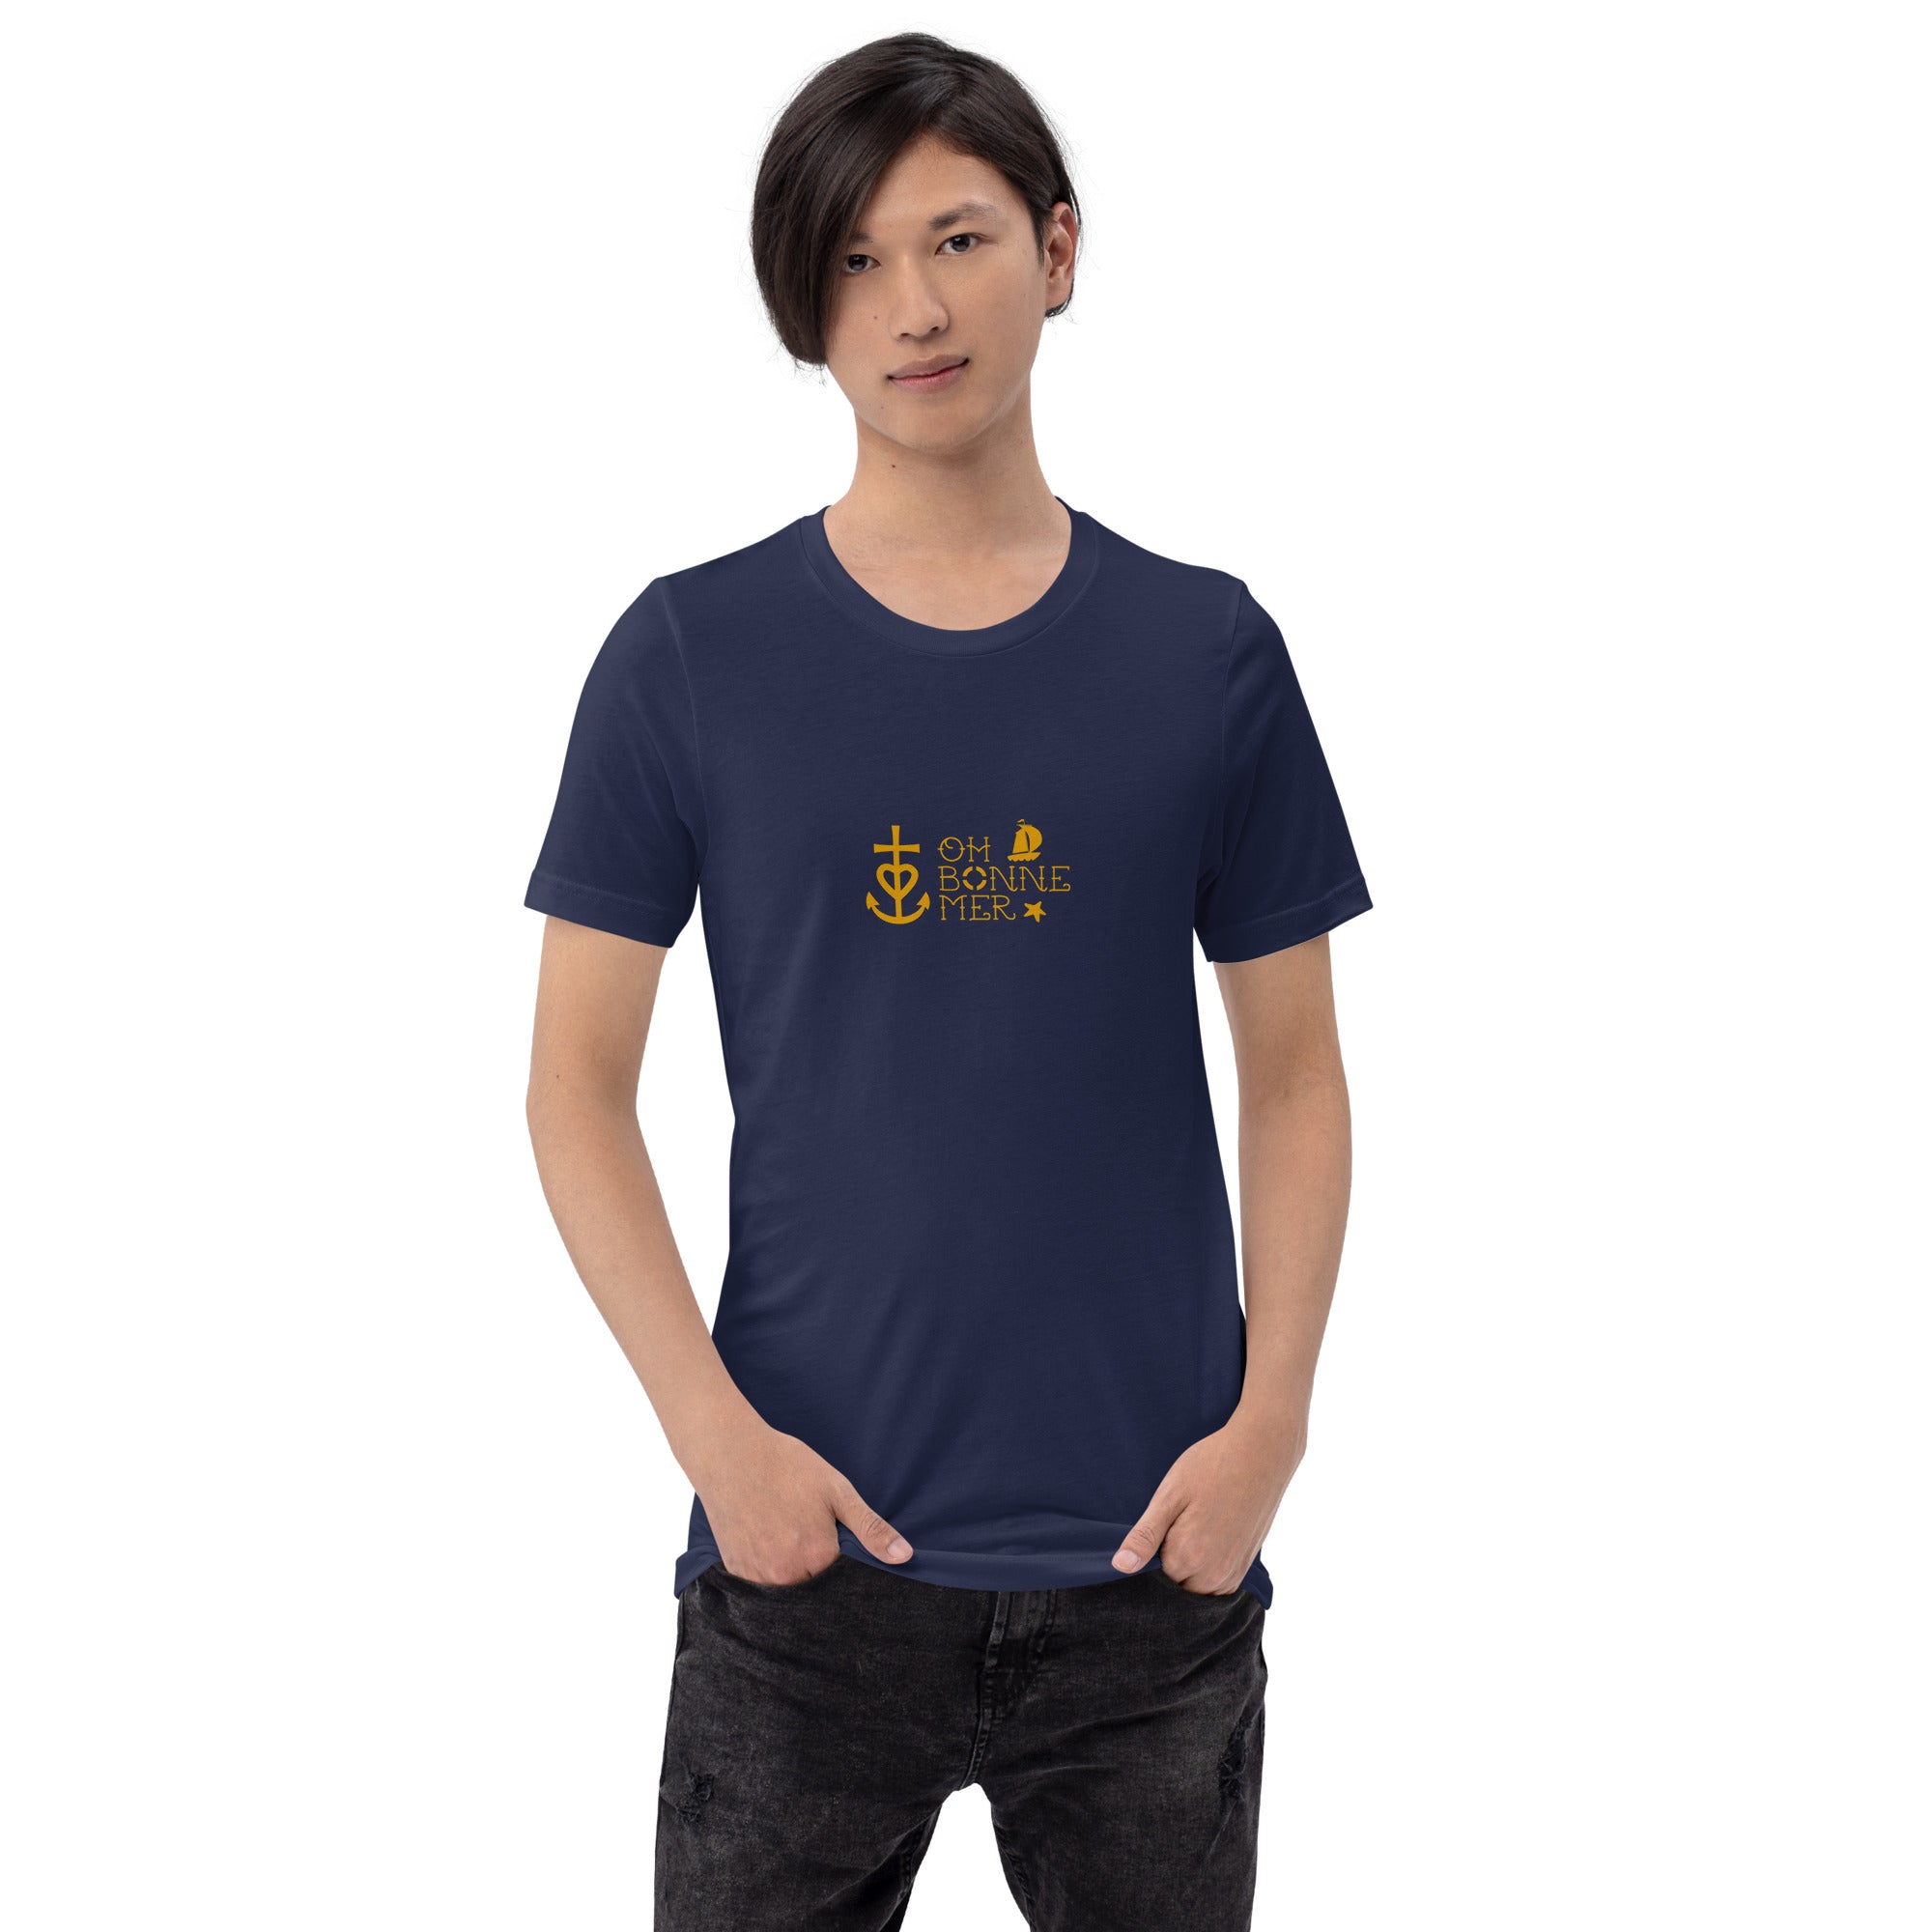 Unisex cotton t-shirt Oh Bonne Mer 2 on dark colors